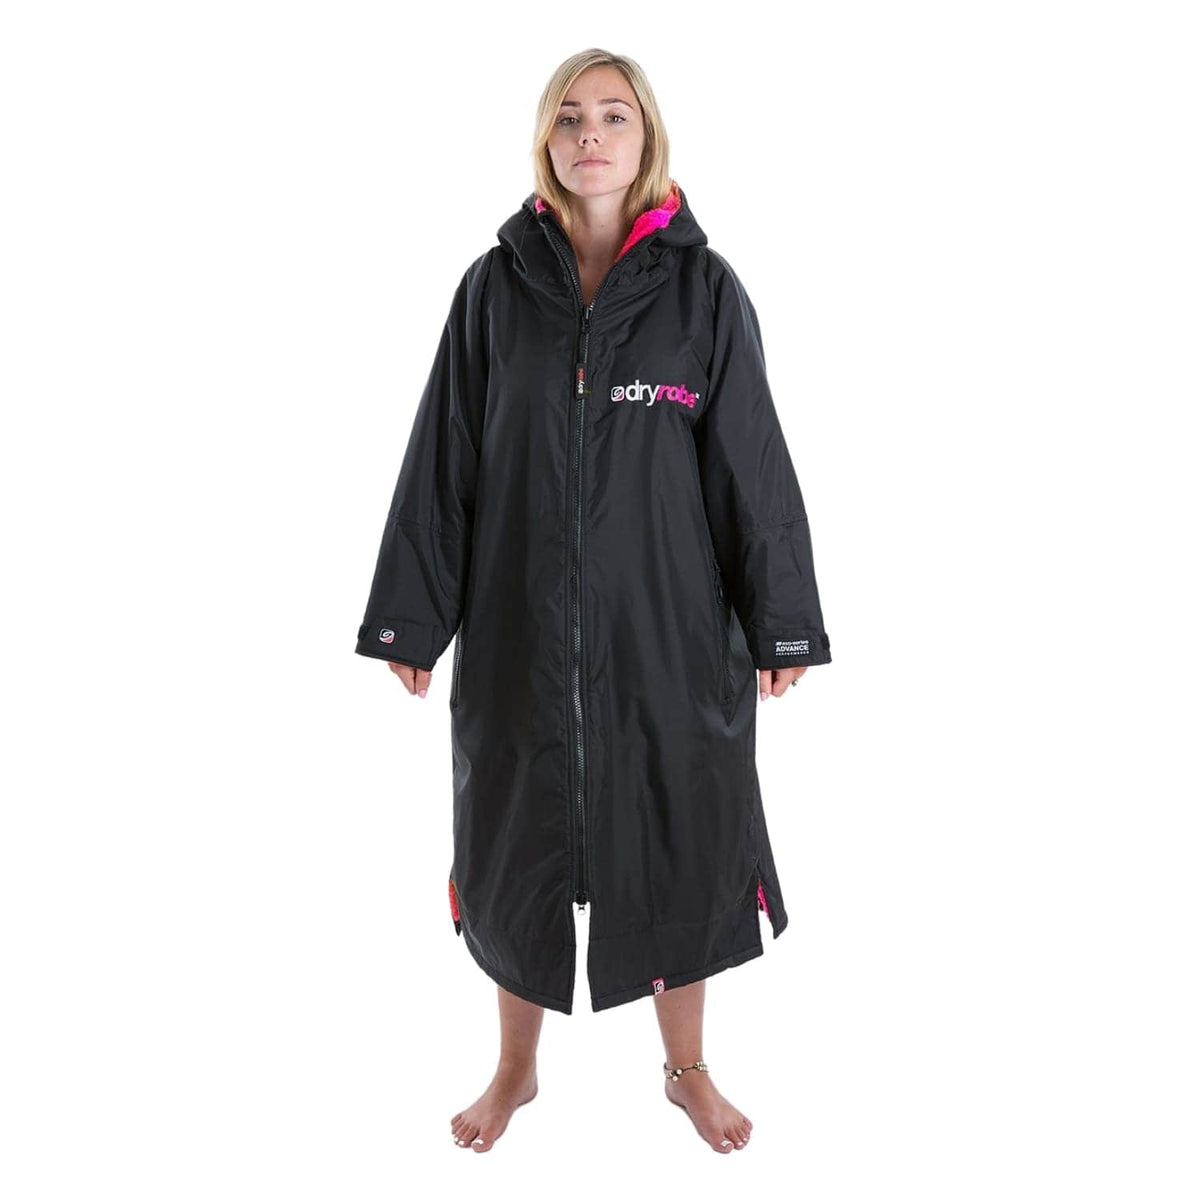 Dryrobe Advance Long Sleeve Drying &amp; Changing Robe - Black/Pink - Changing Robe Poncho Towel by Dryrobe